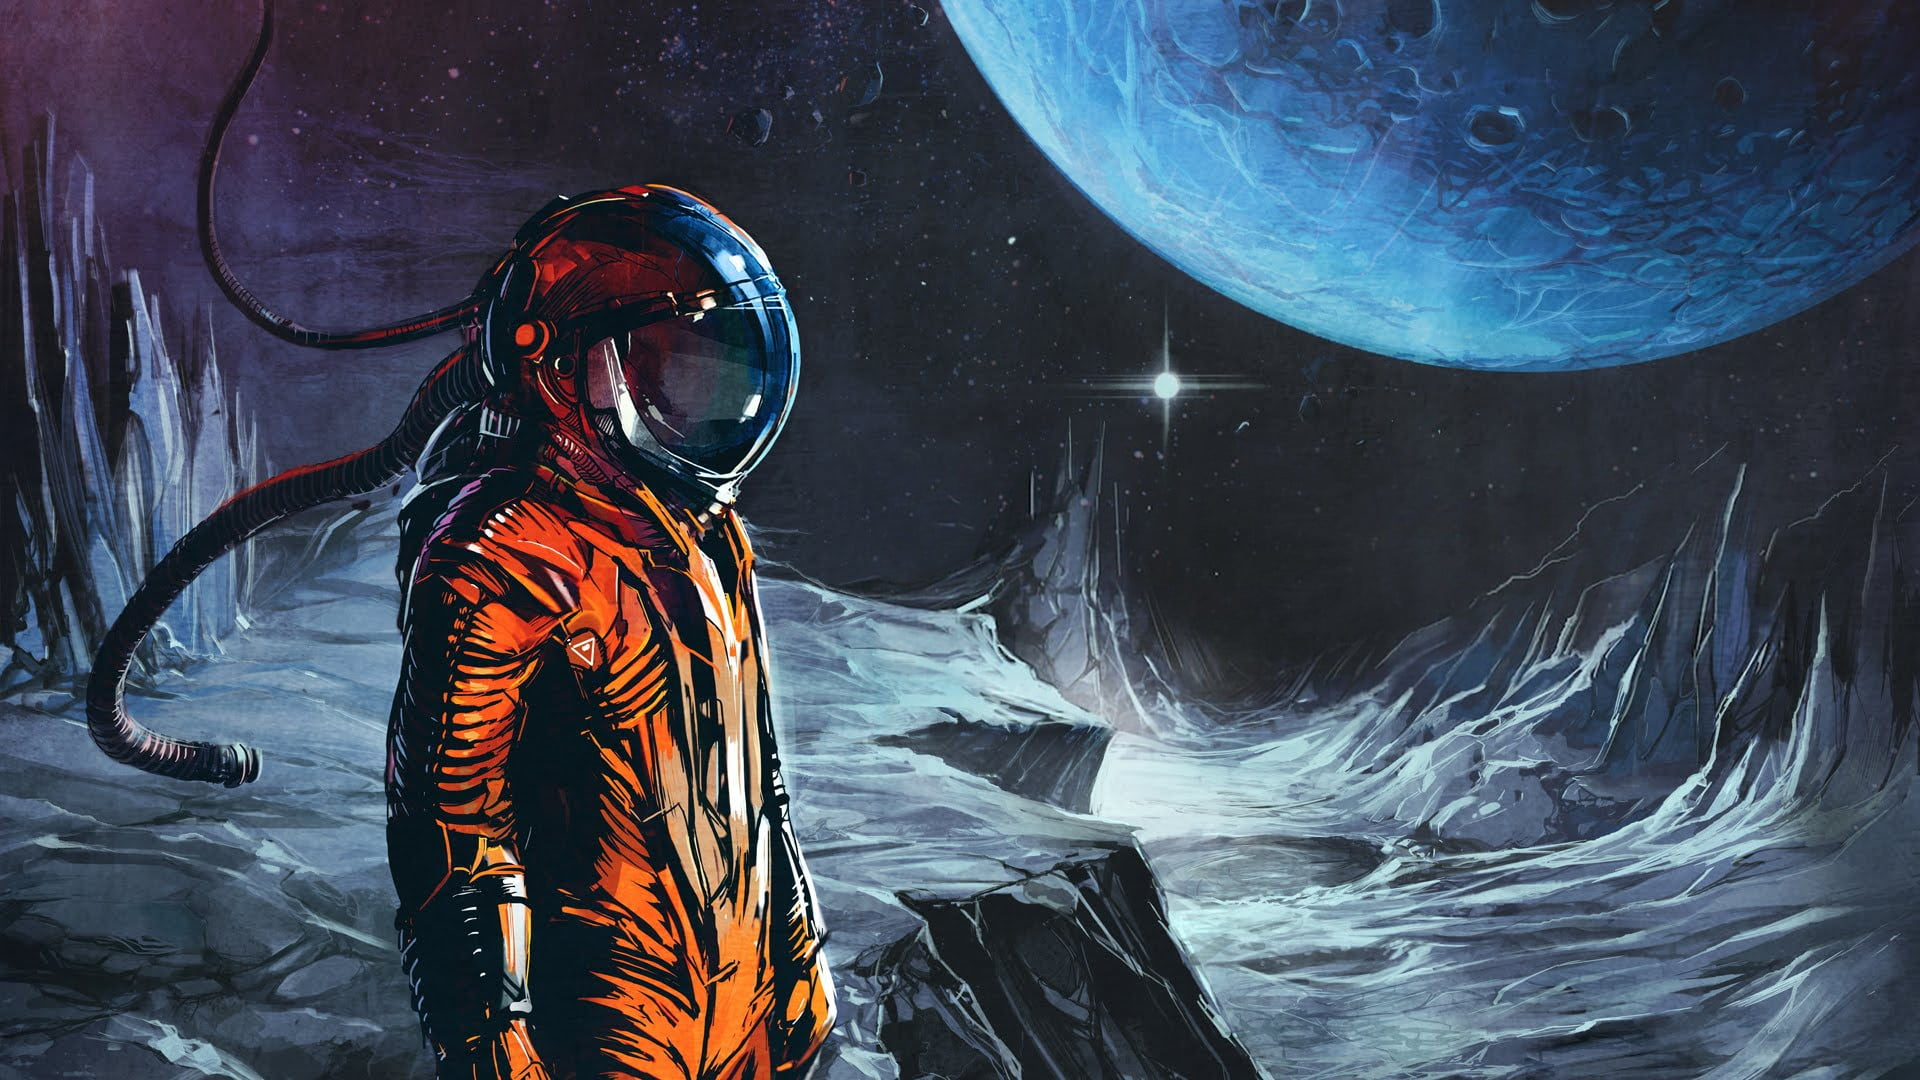 Wallpaper man in orange astronaut suit with moon wallpaper, man with helmet on moon painting